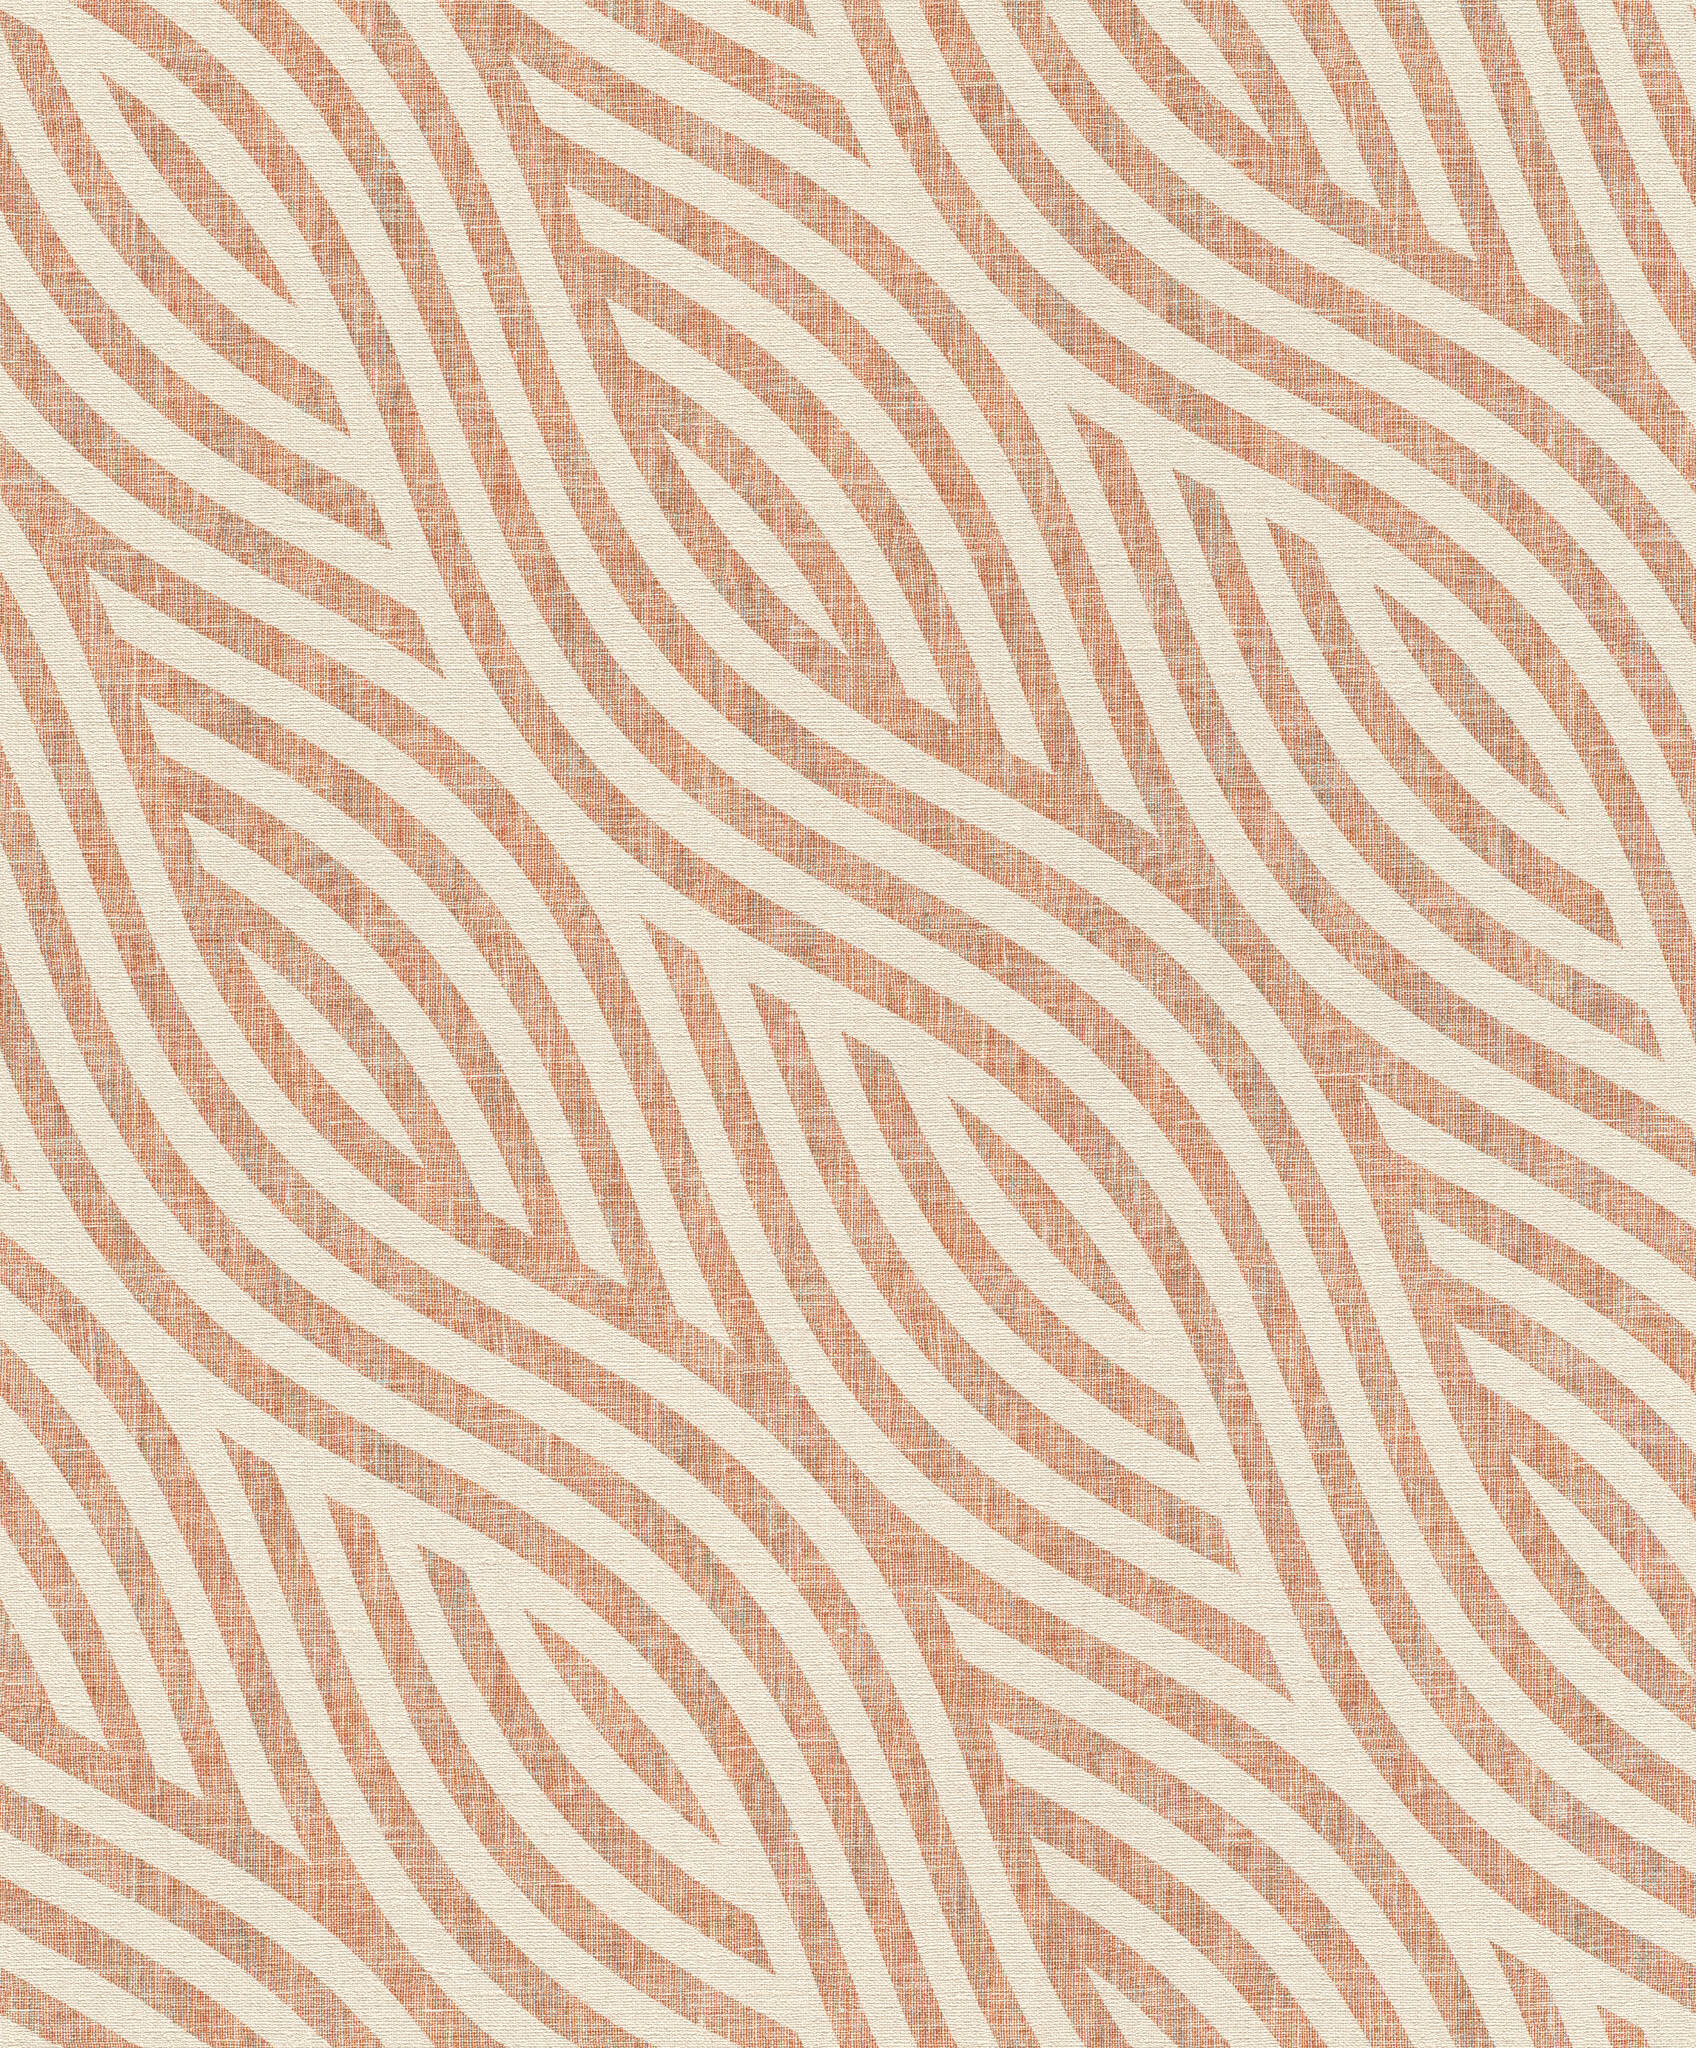 Textil-Struktur Linien Vliestapete in Beige & Rot - Kalahari 704549